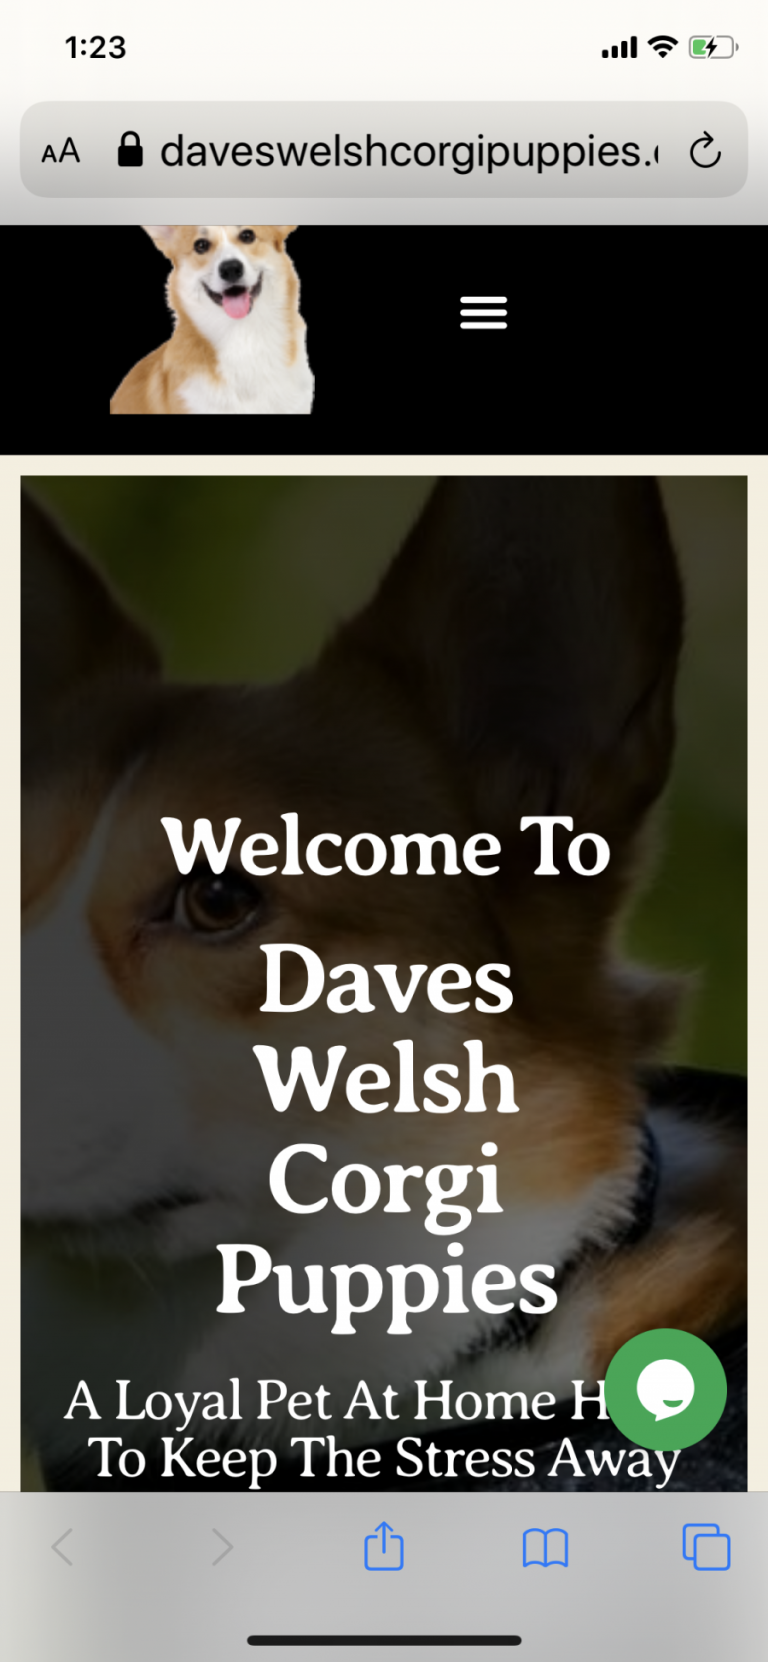 Dave’s Welsh Corgi Puppies